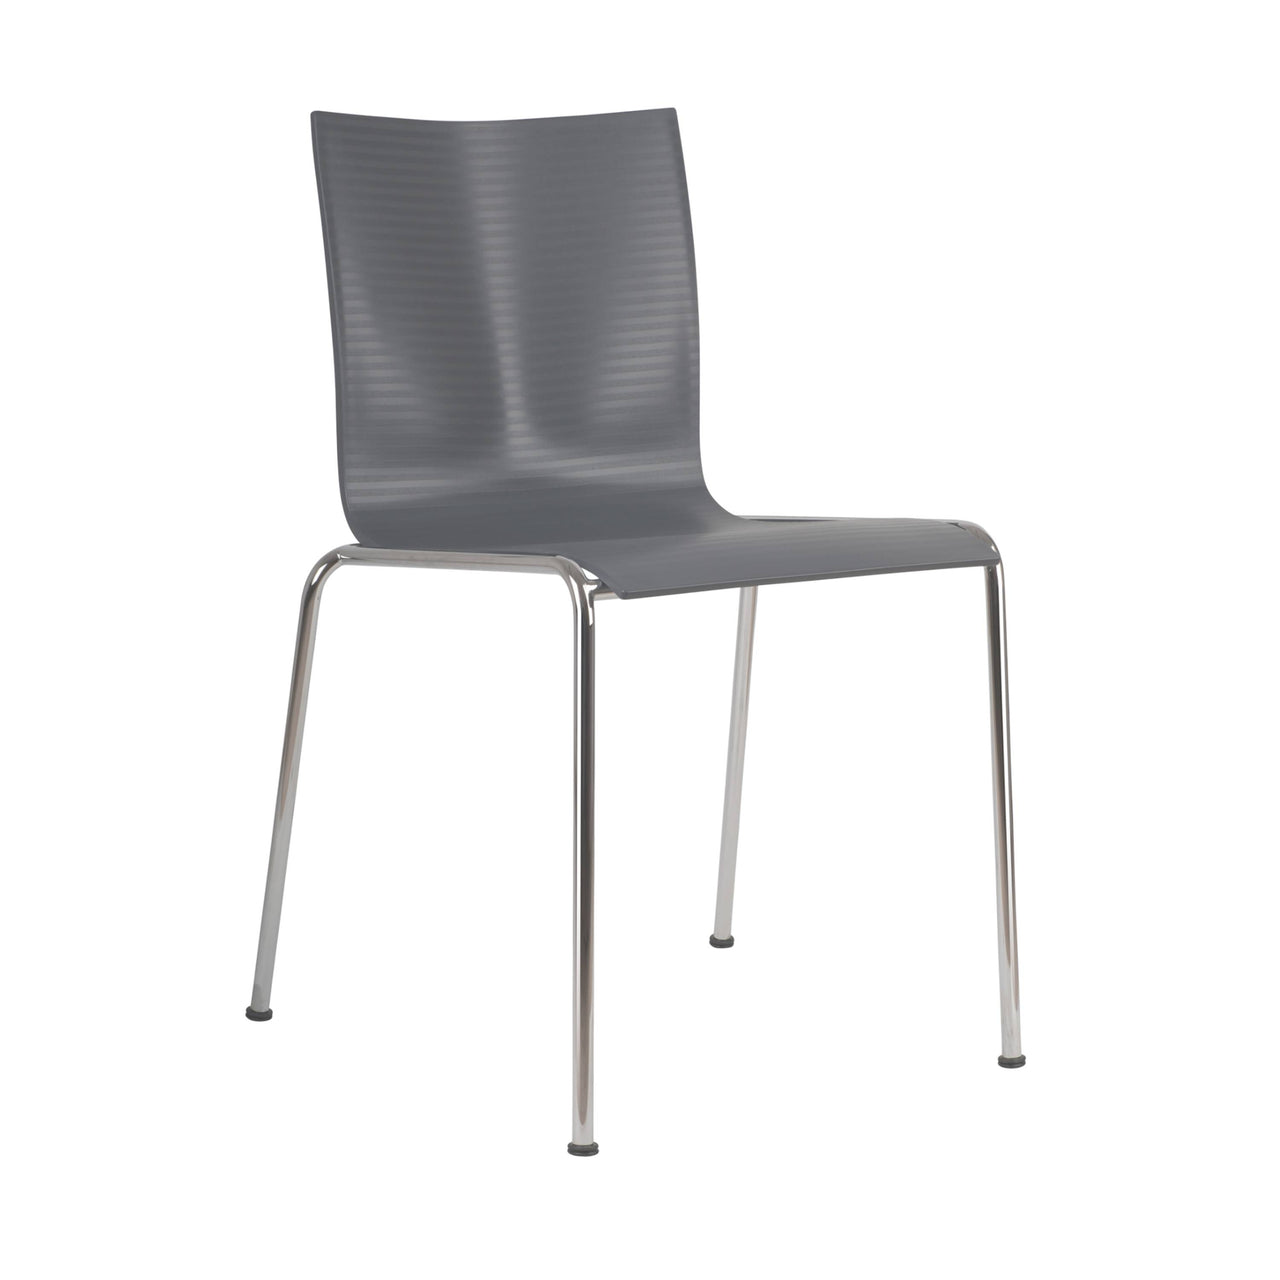 Chairik 101 Chair: Plastic + Anthracite